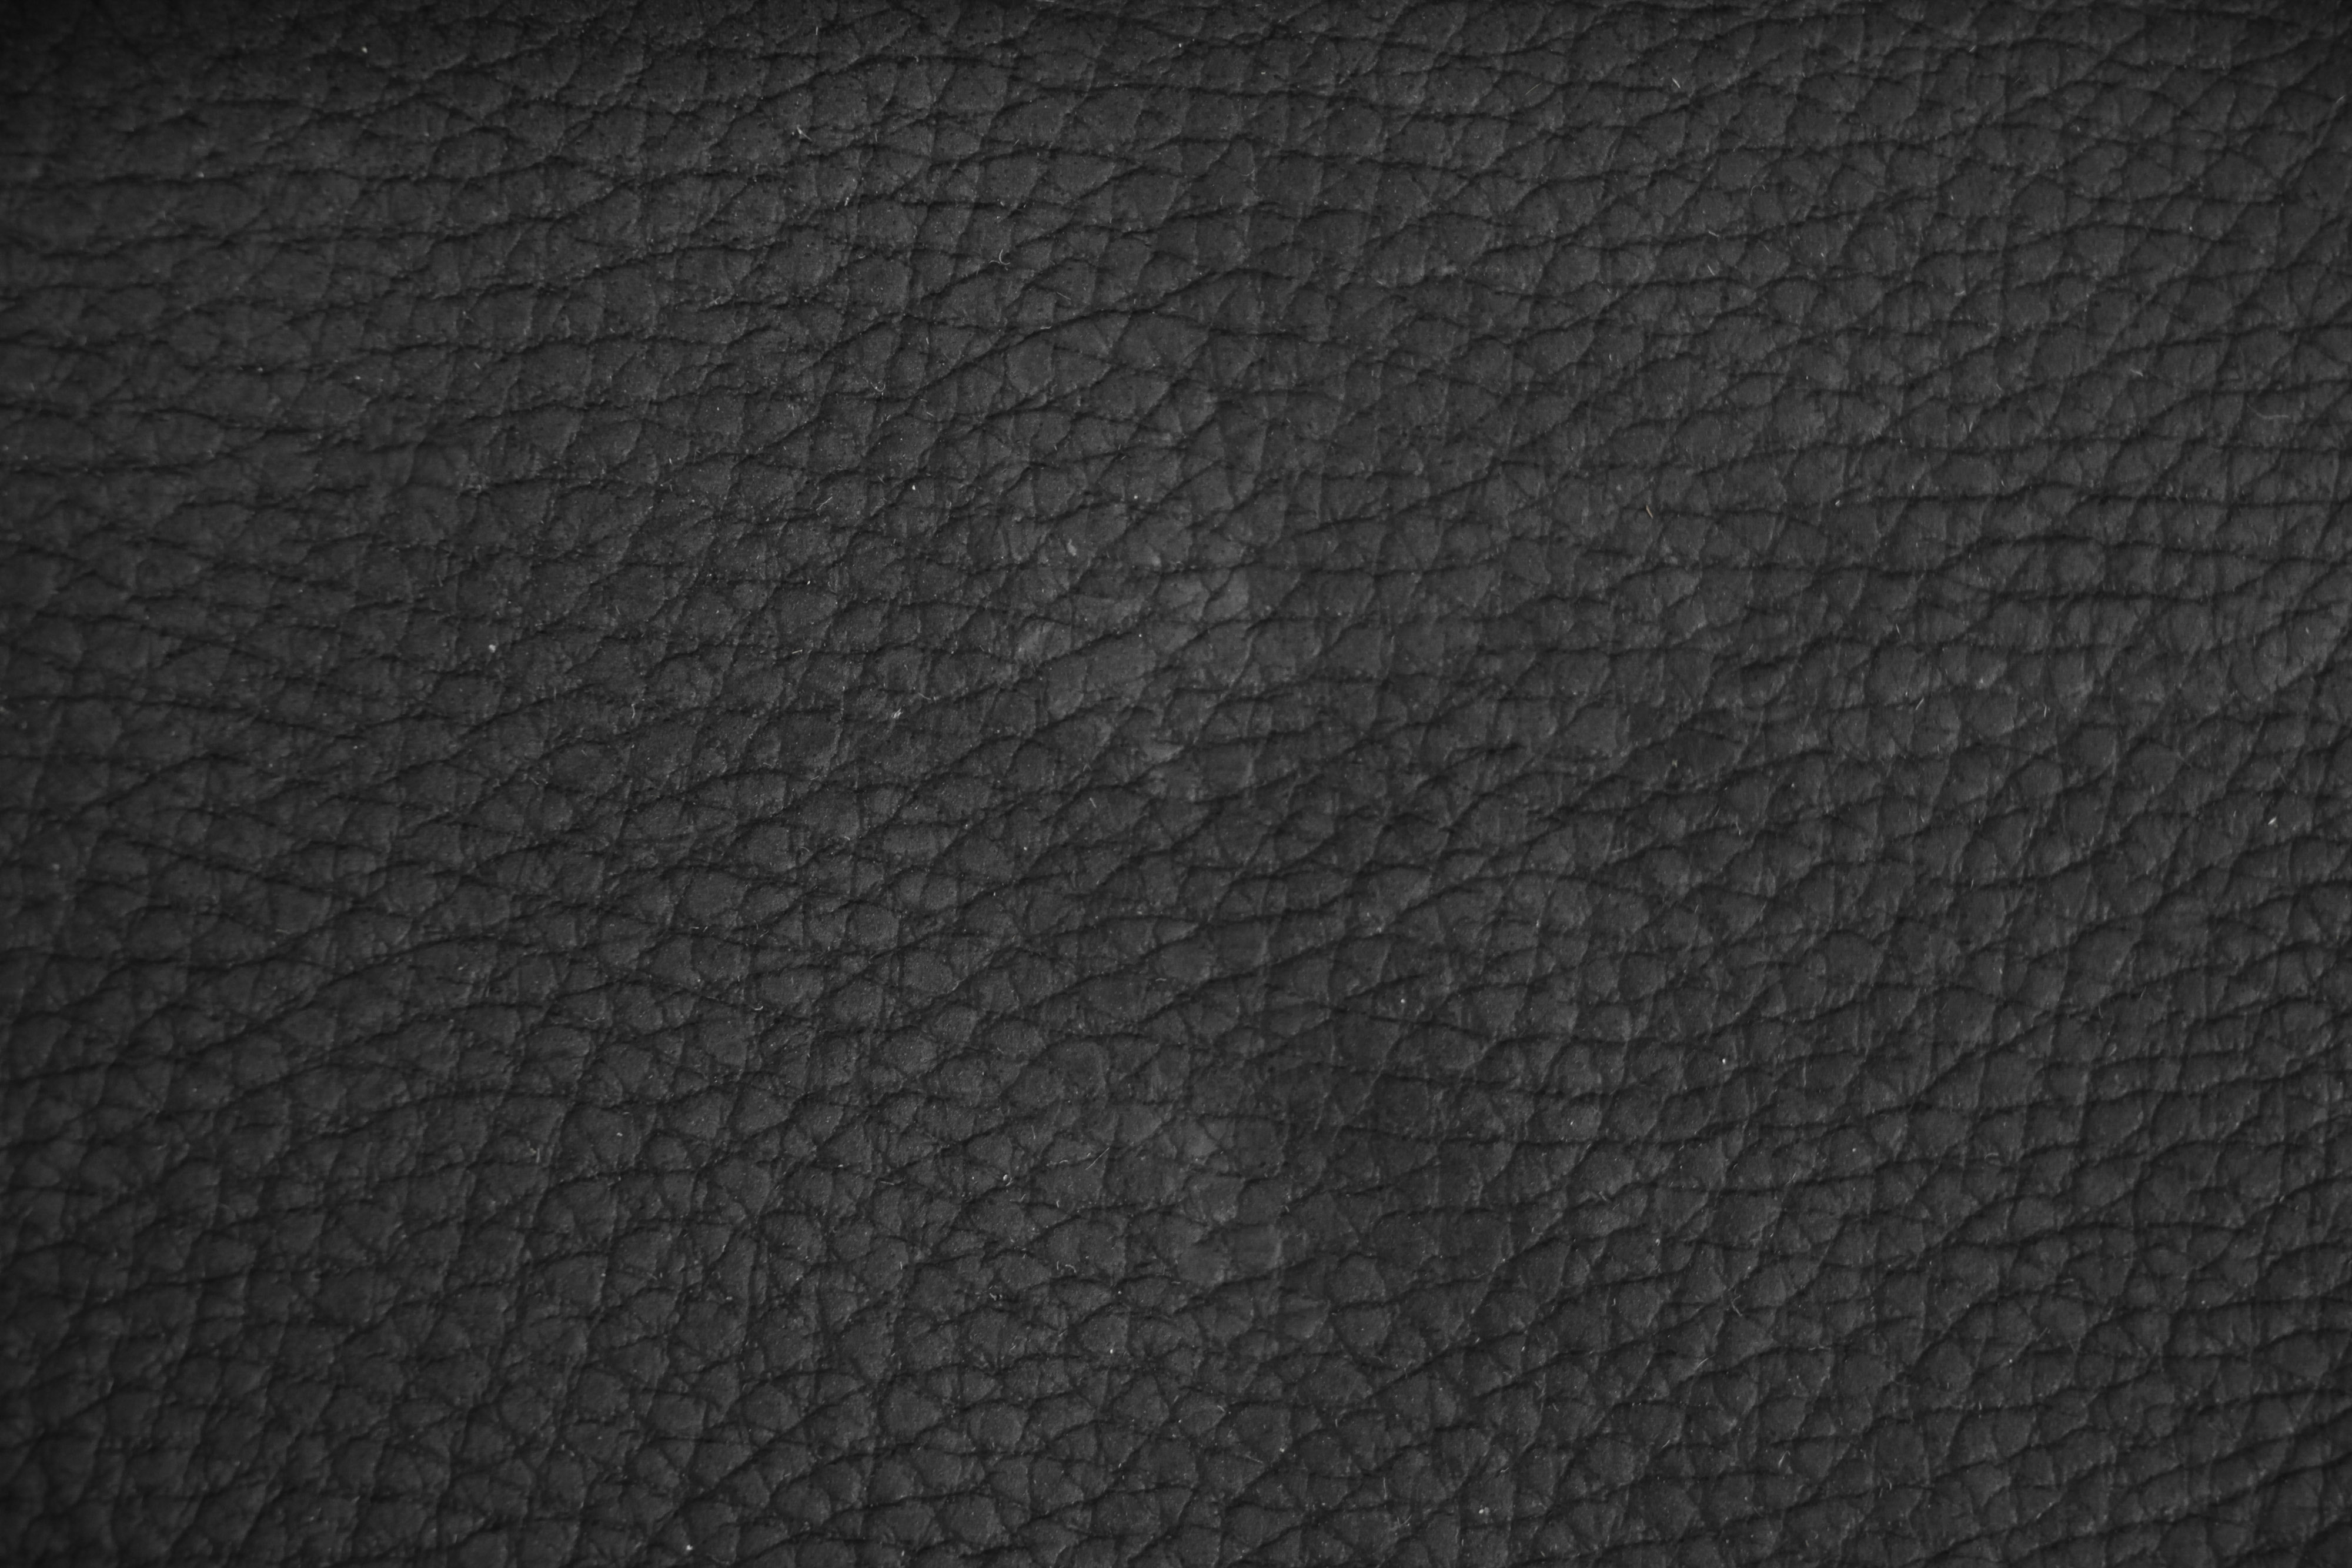 black leather texture large close up grain material dark fabric ...